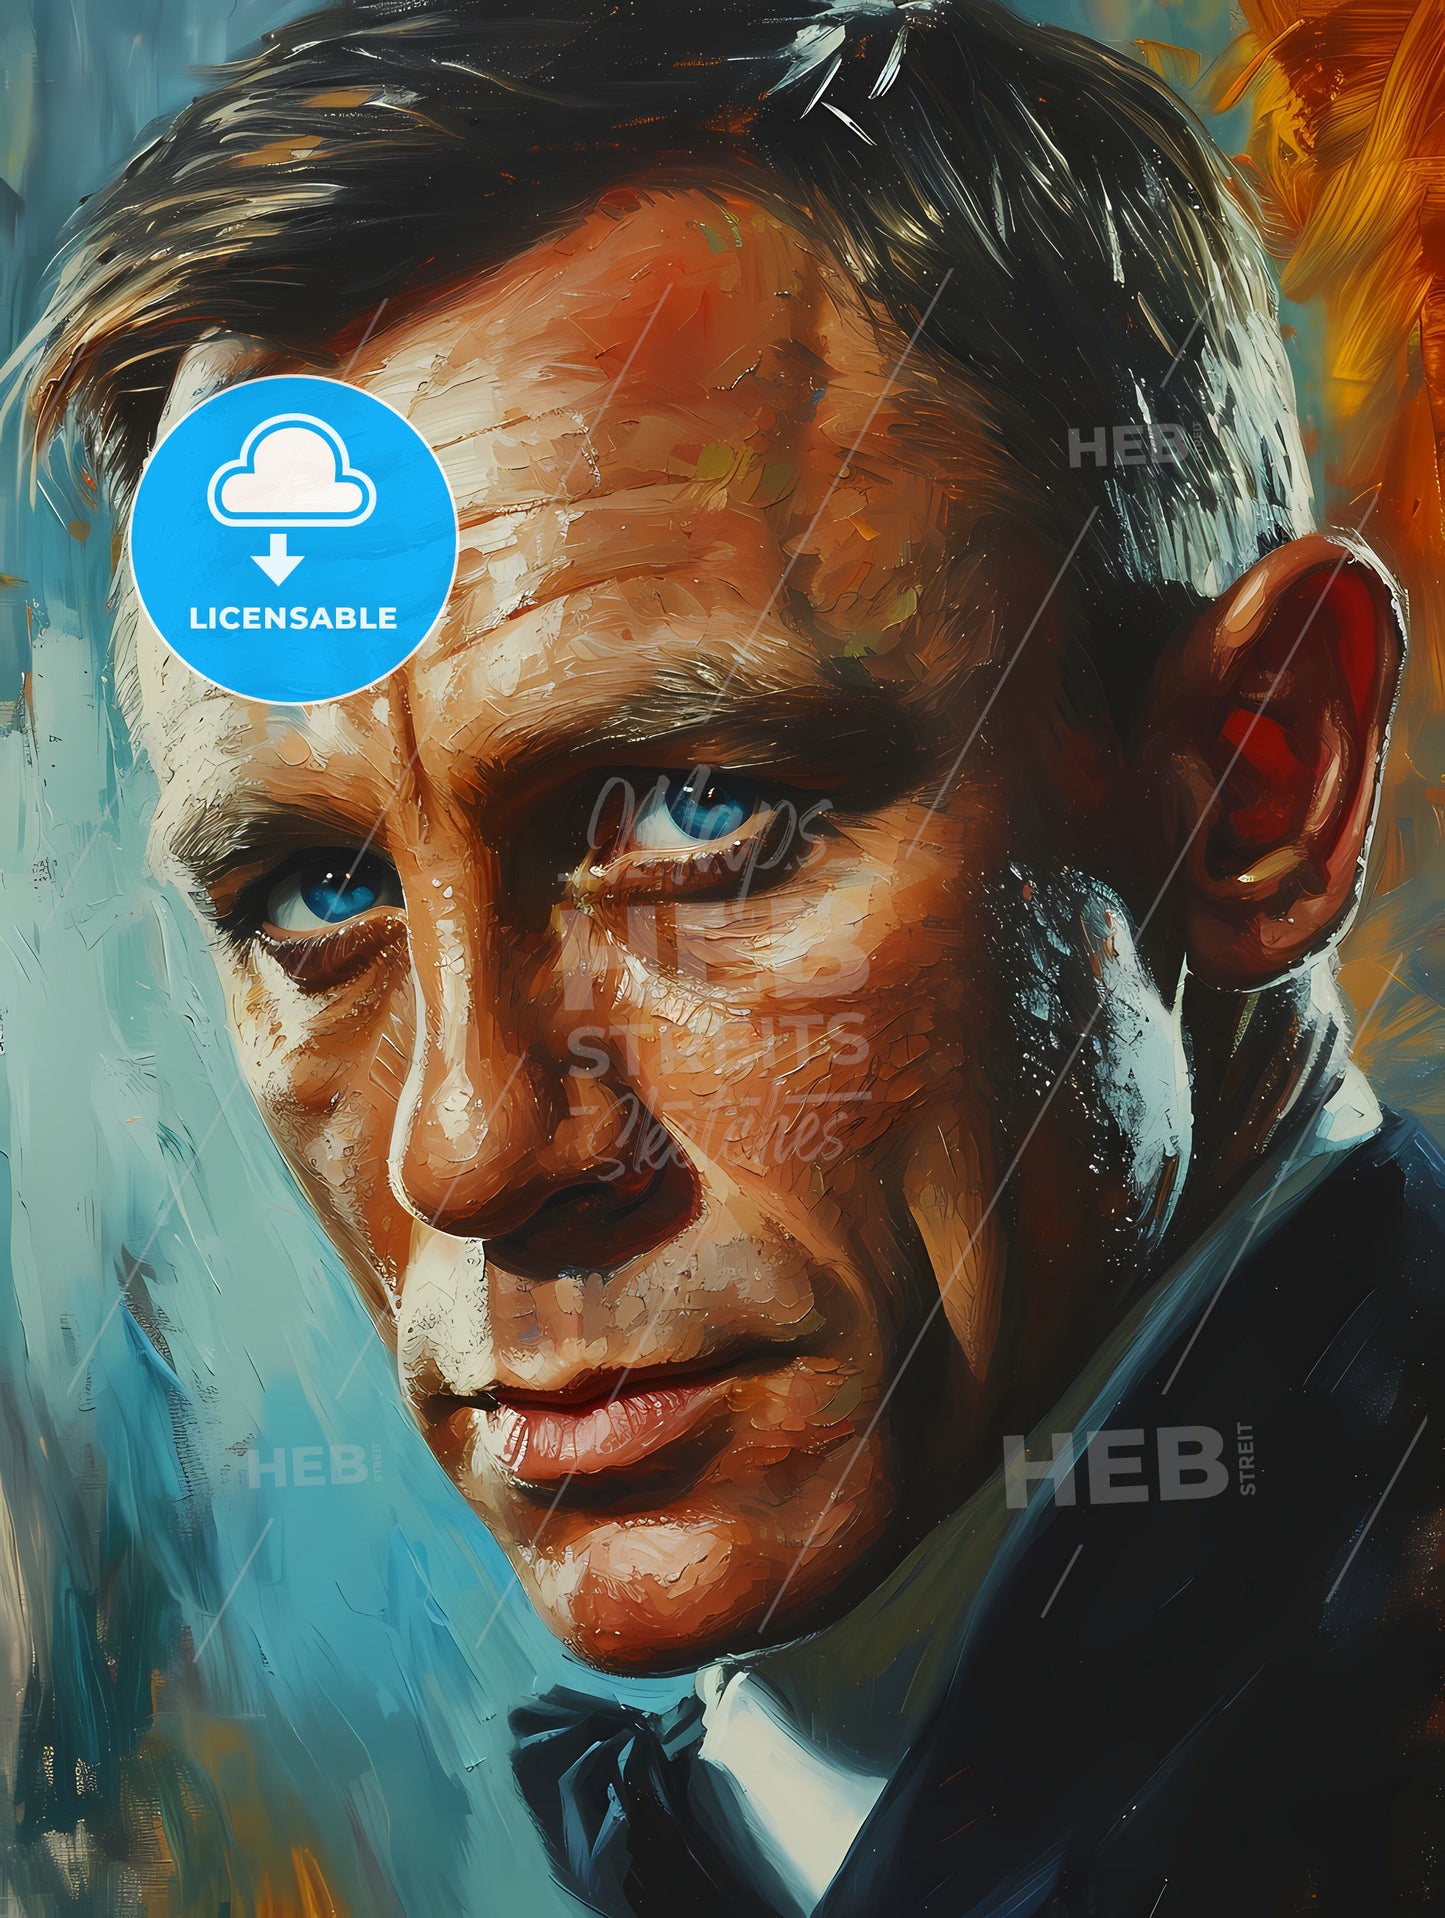 James Bond Portrait, A Man With Blue Eyes